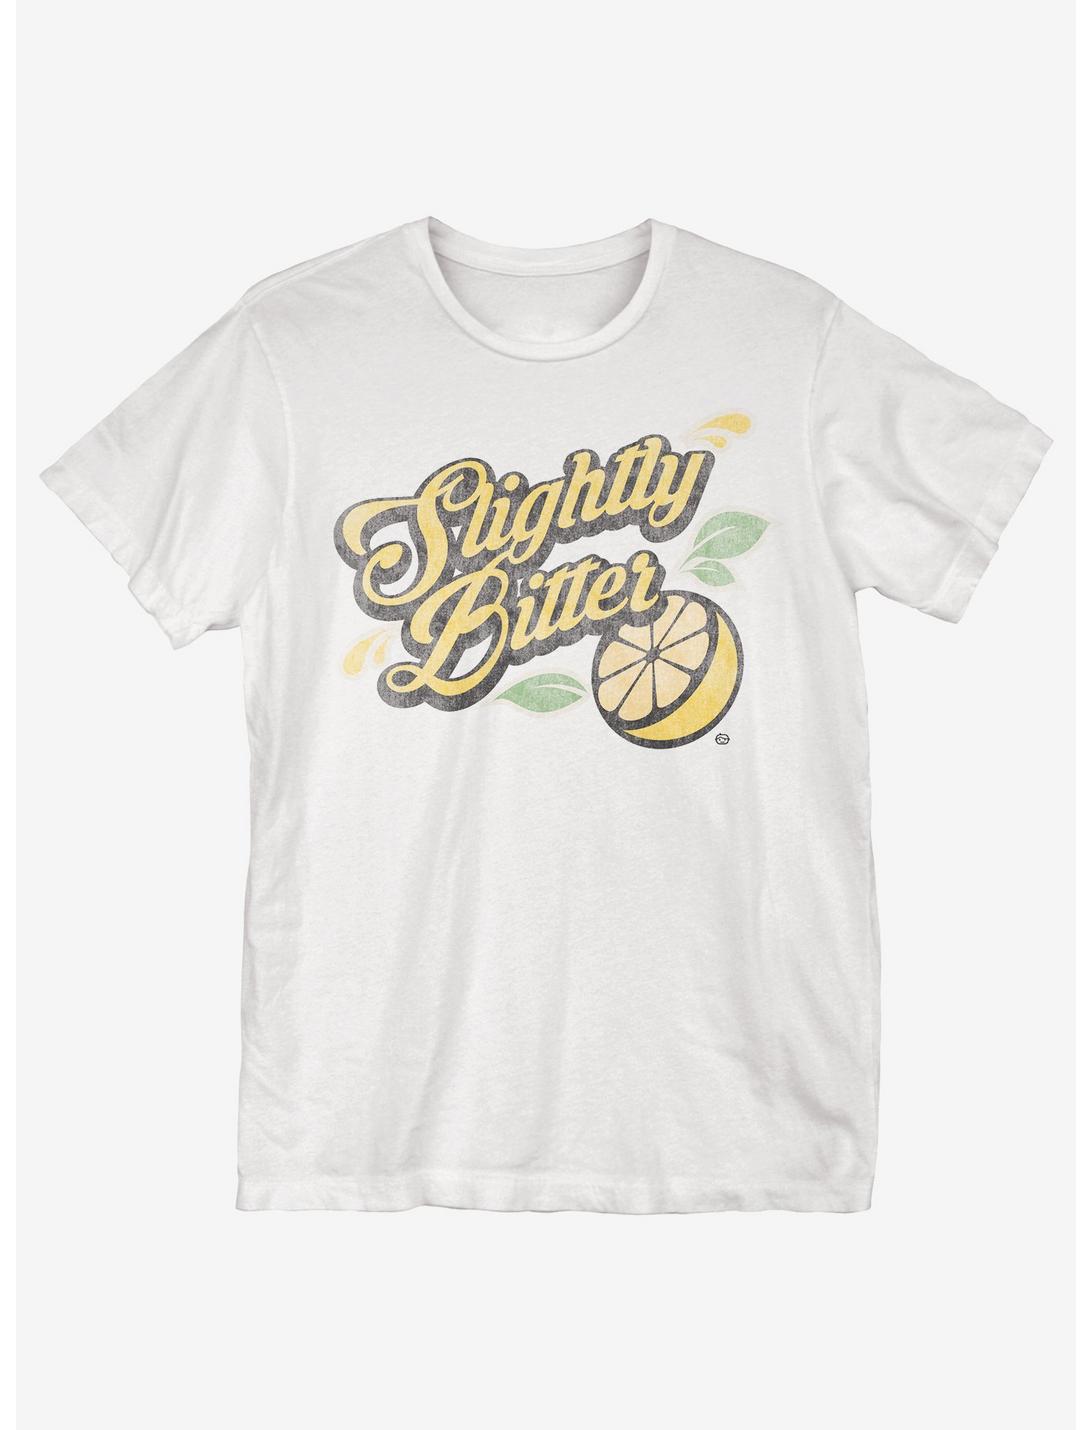 Slightly Bitter Color T-Shirt, WHITE, hi-res